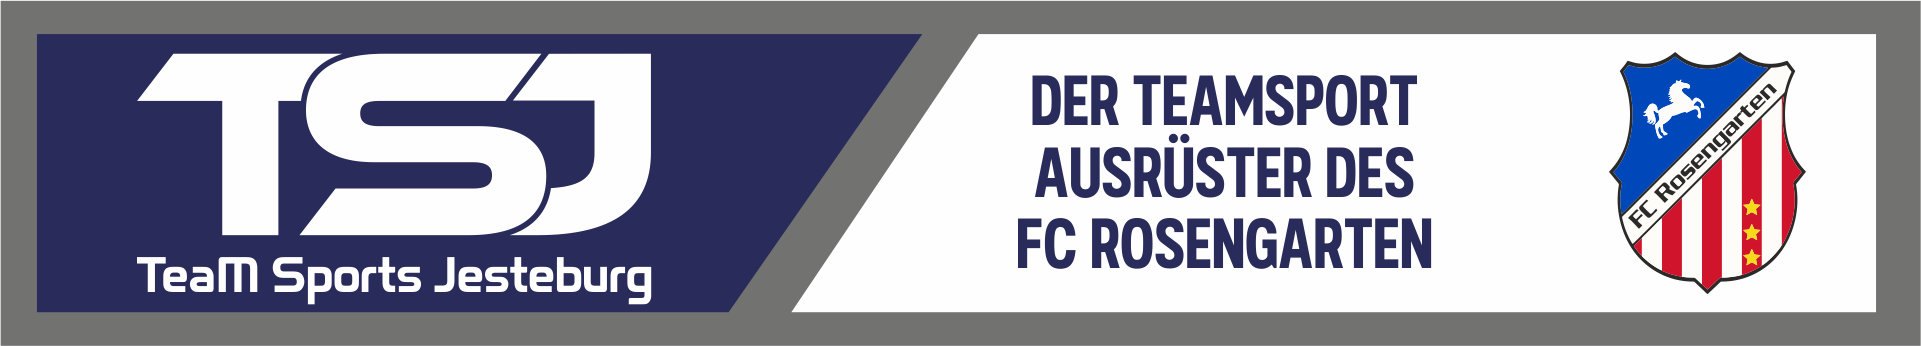 FC Rosengarten Title Image